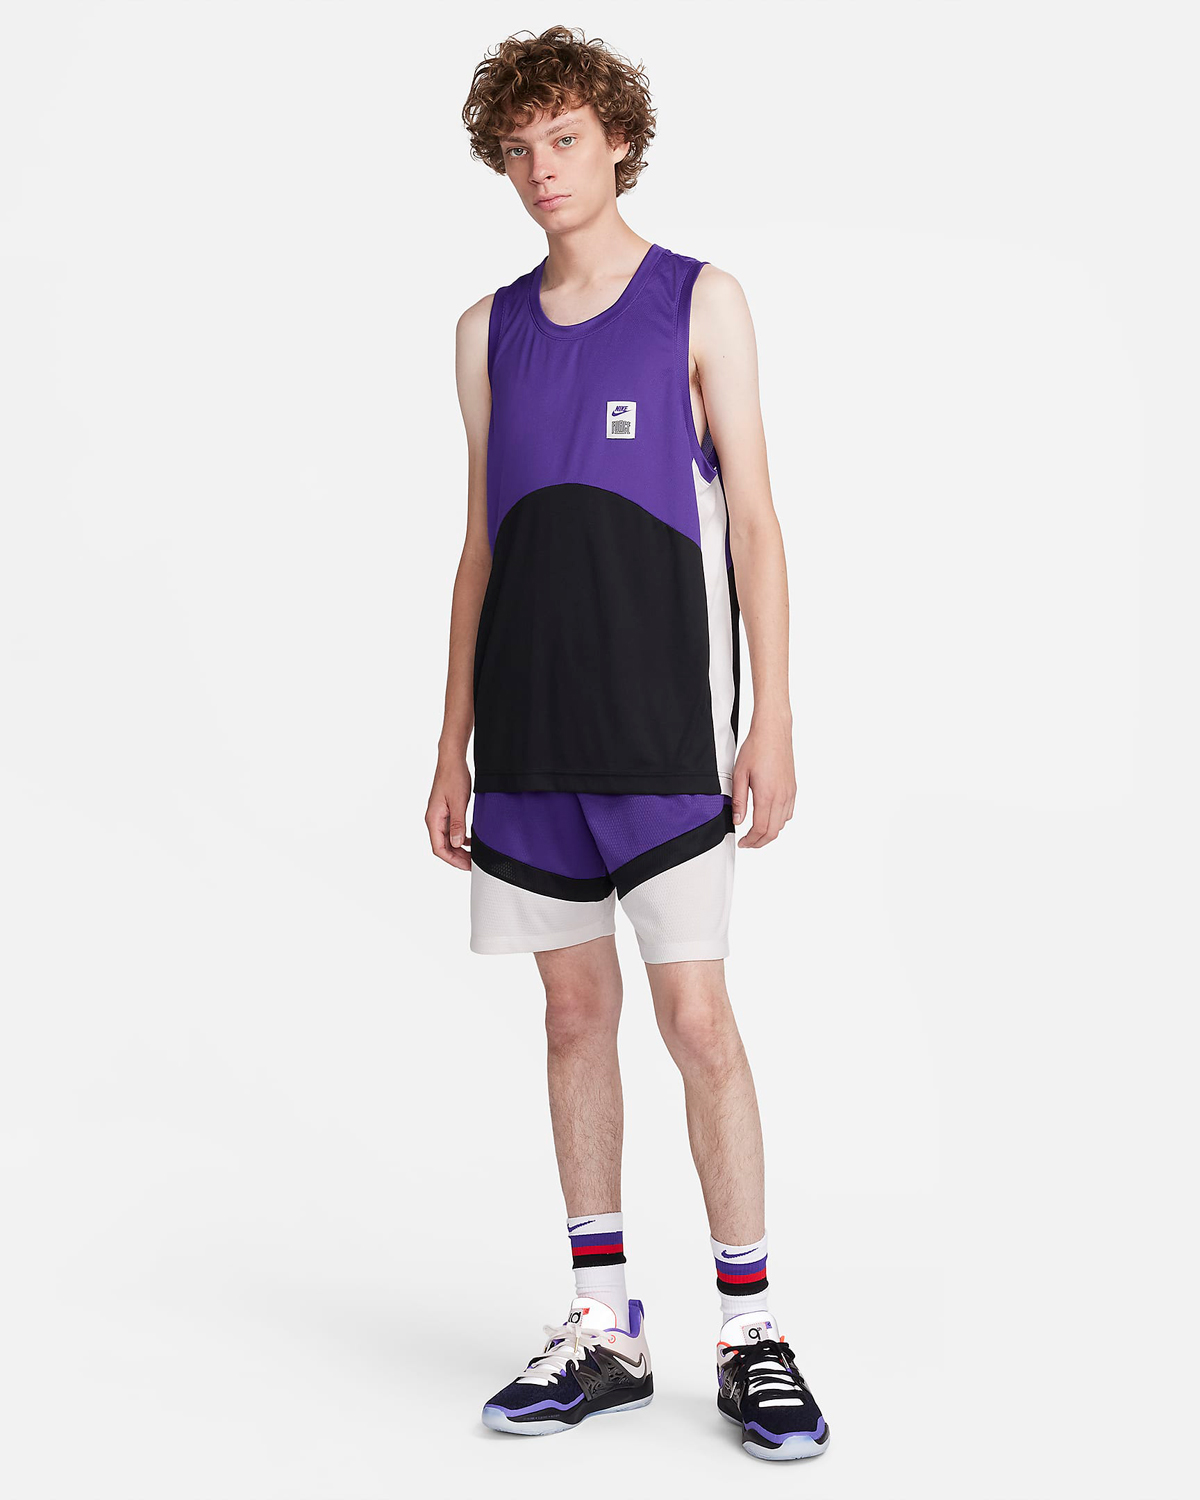 Nike-Starting-5-Basketball-Jersey-Field-Purple-Outfit